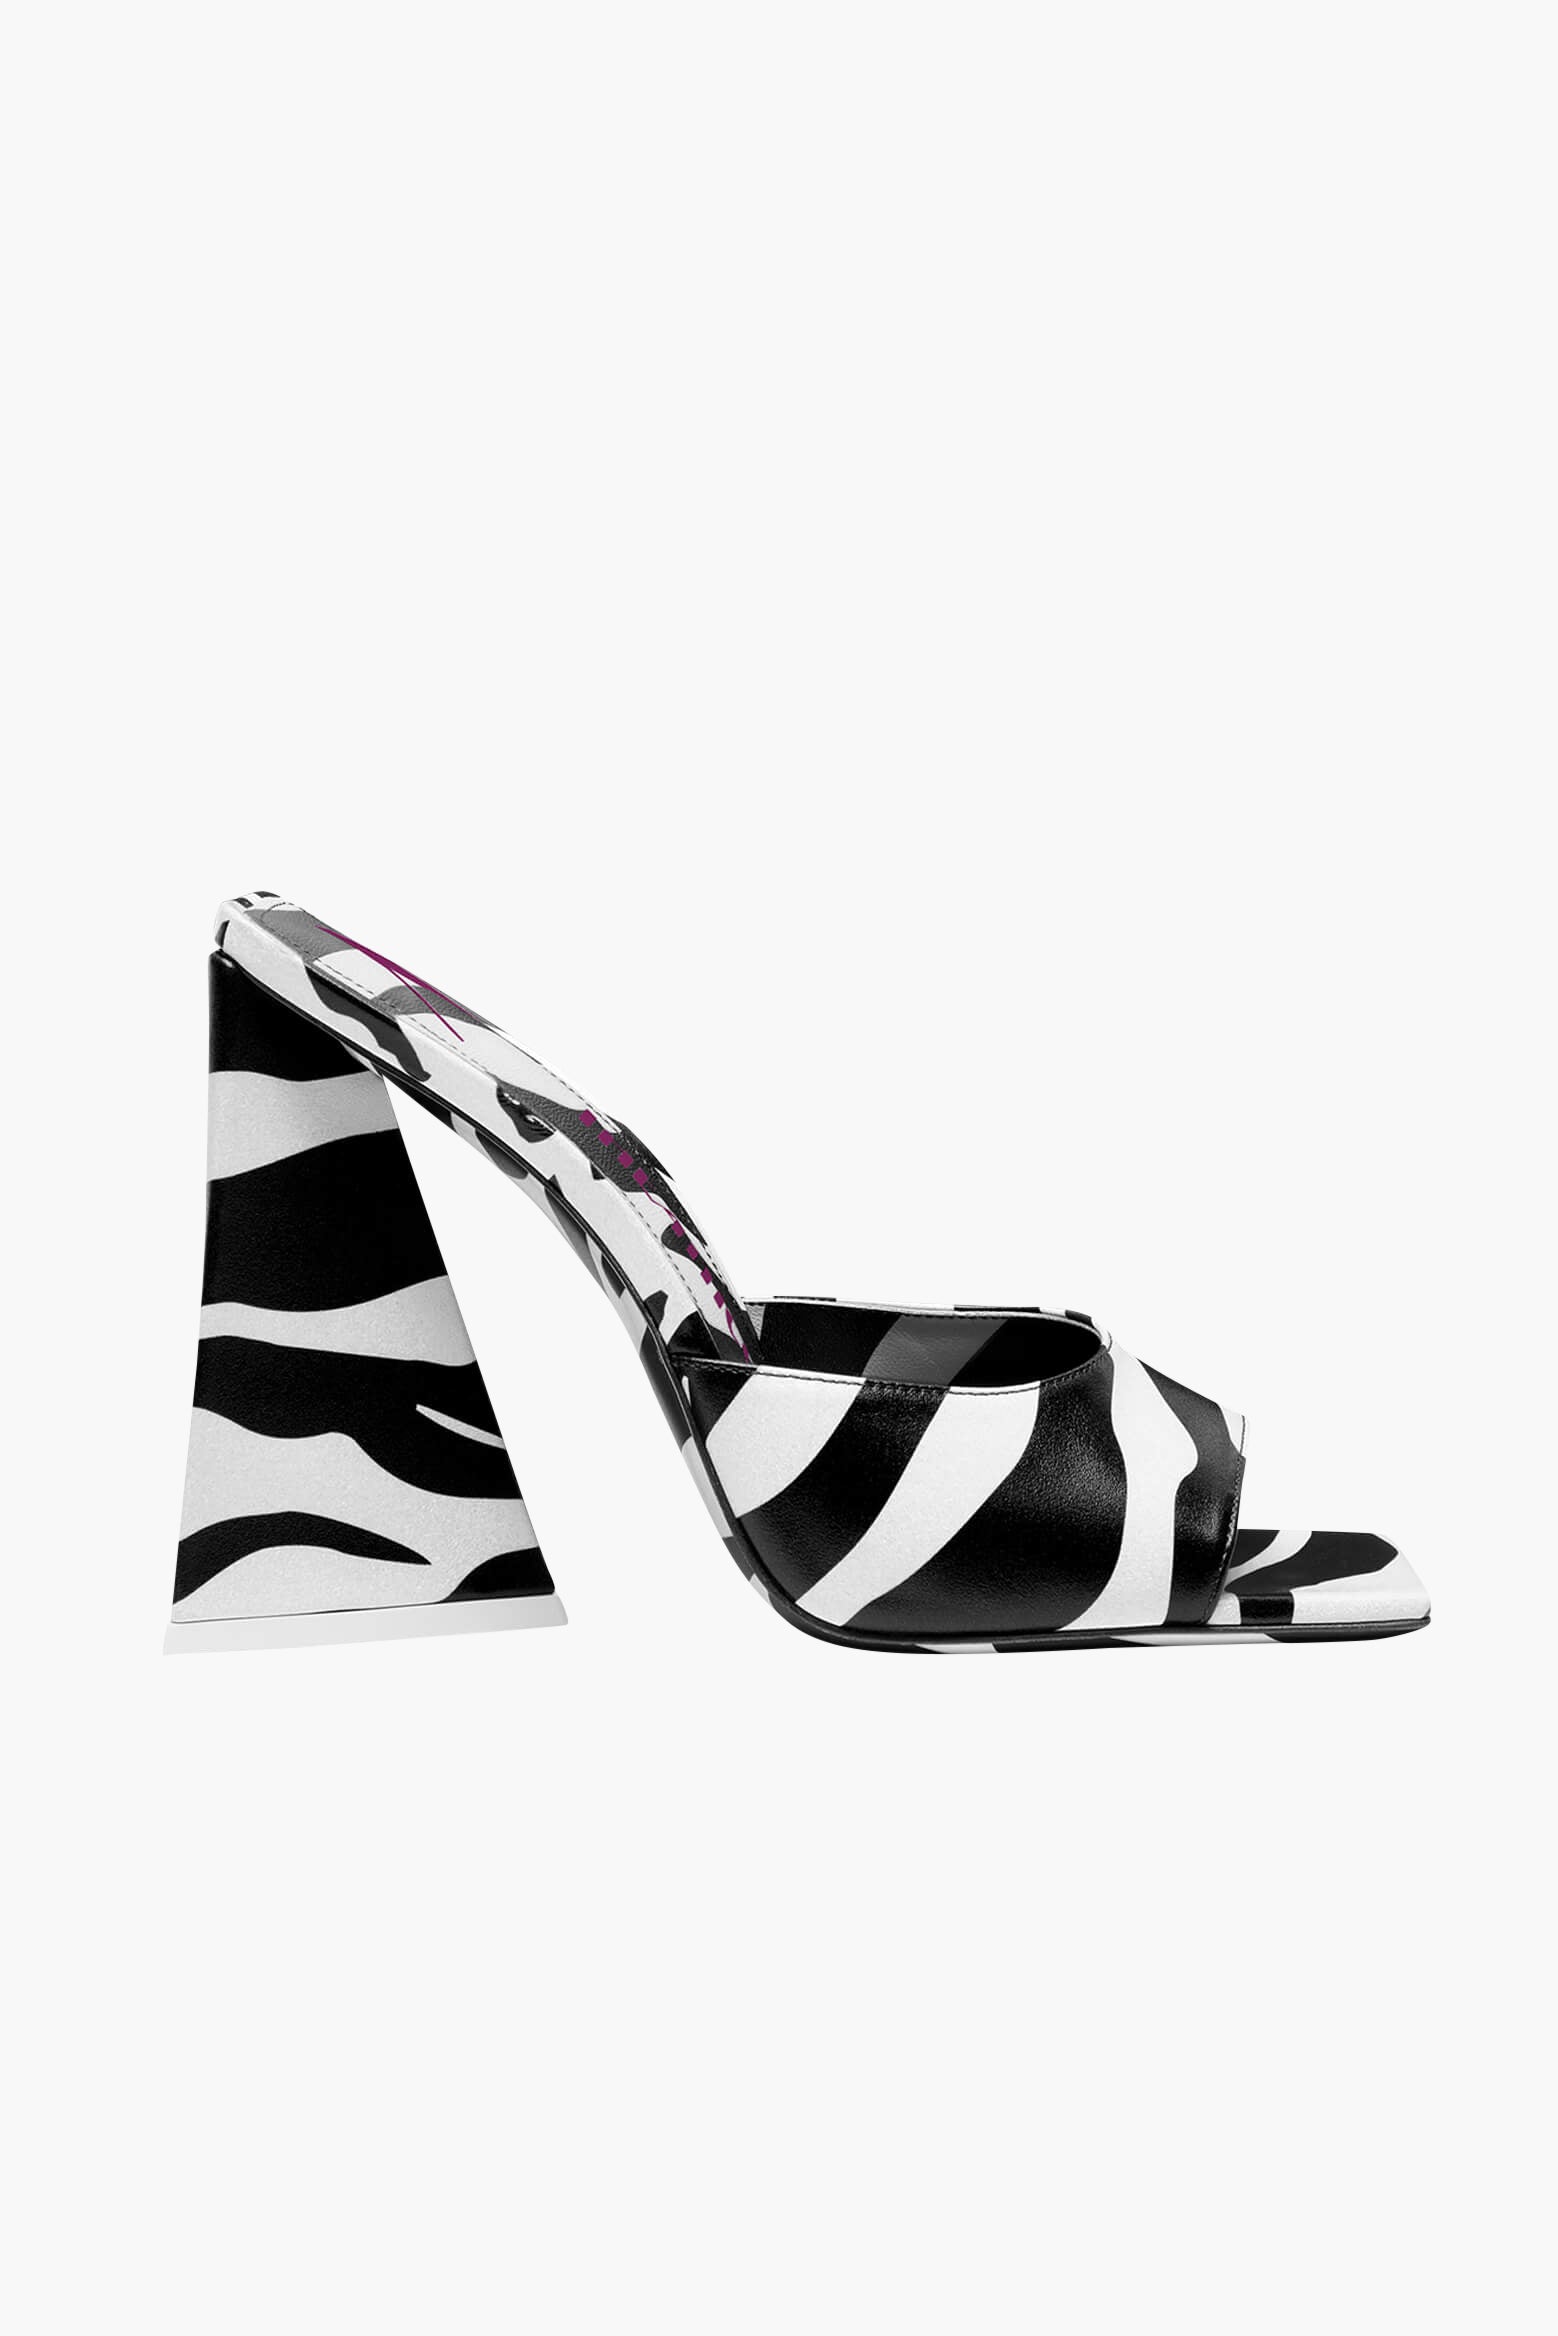 The Attico Devon Mule in White and Black Zebra Print available at The New Trend